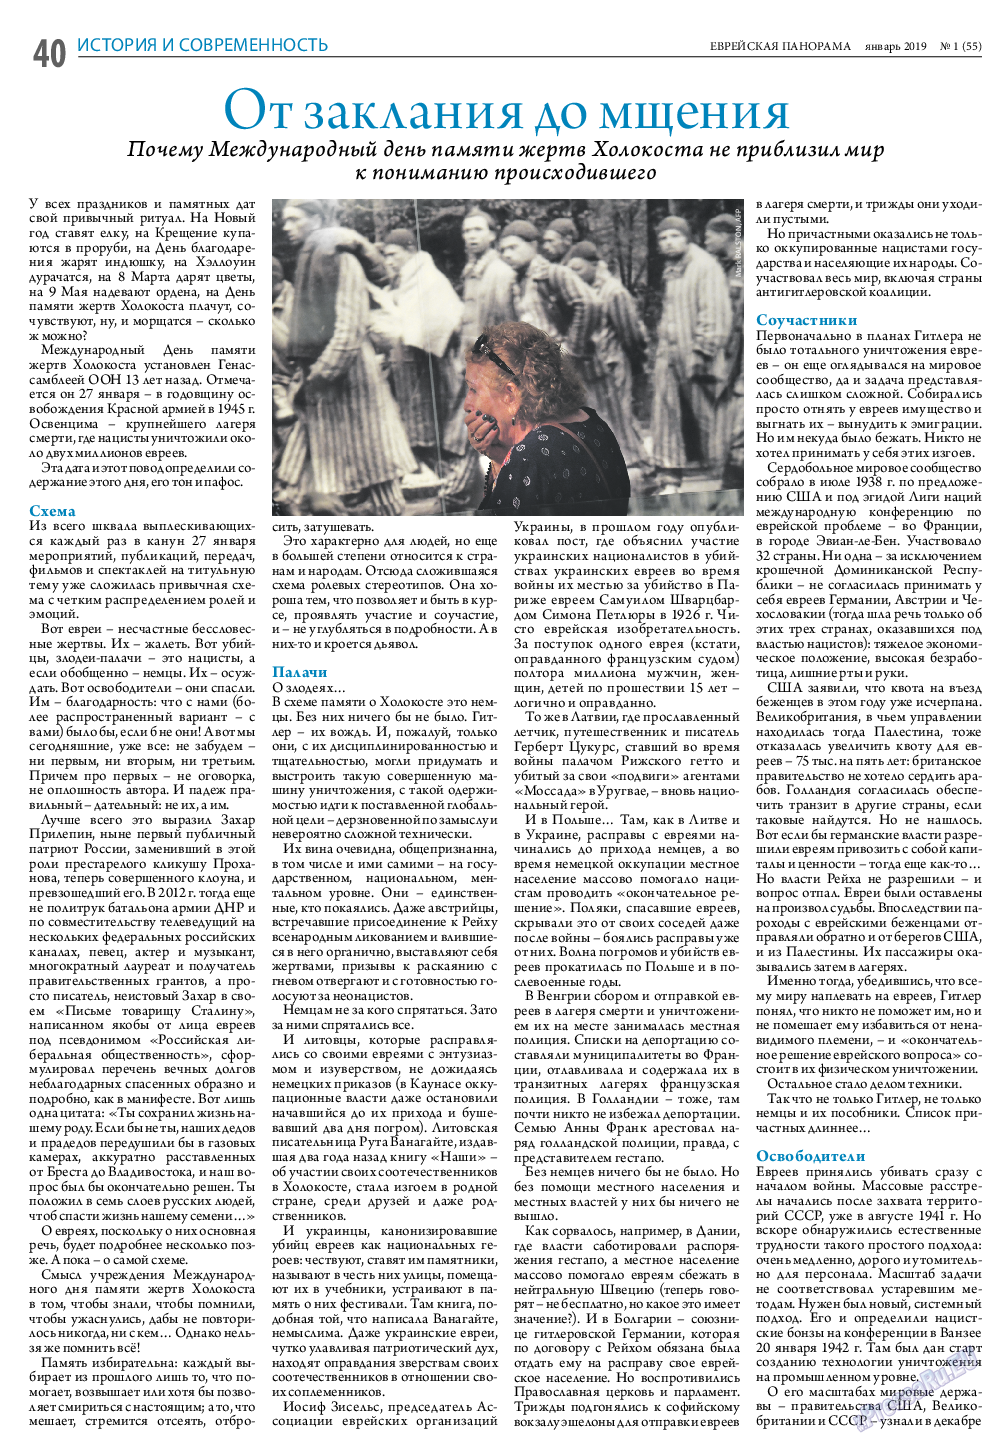 Еврейская панорама, газета. 2019 №1 стр.40